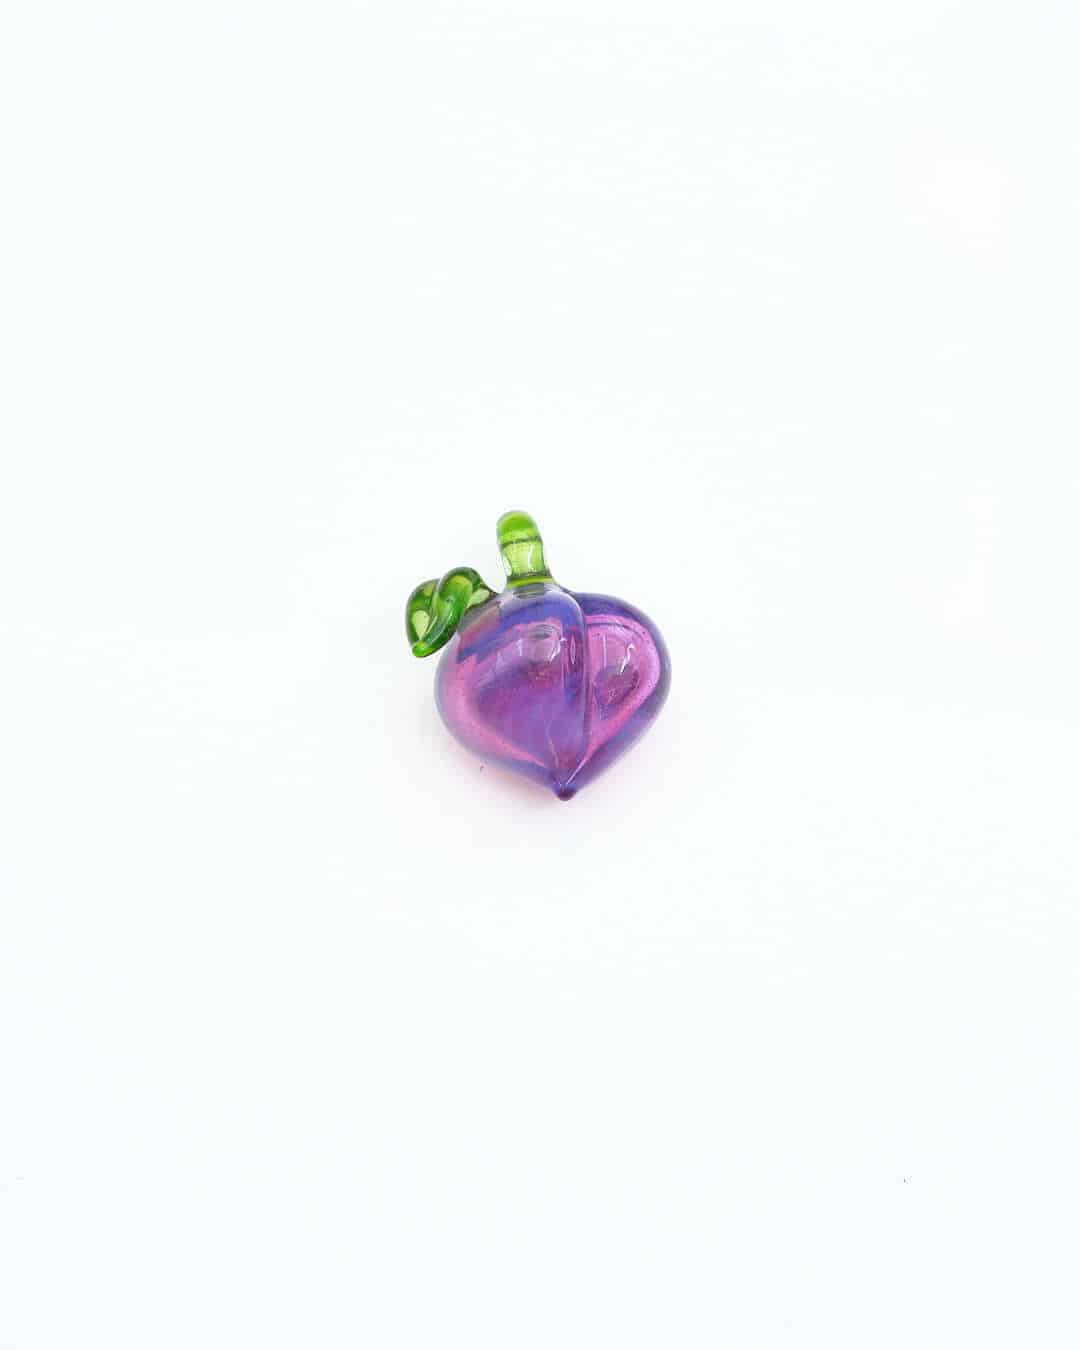 luxurious glass pendant - (41C) Purple Peach w/ UV Green Stem Pendant by Gnarla Carla